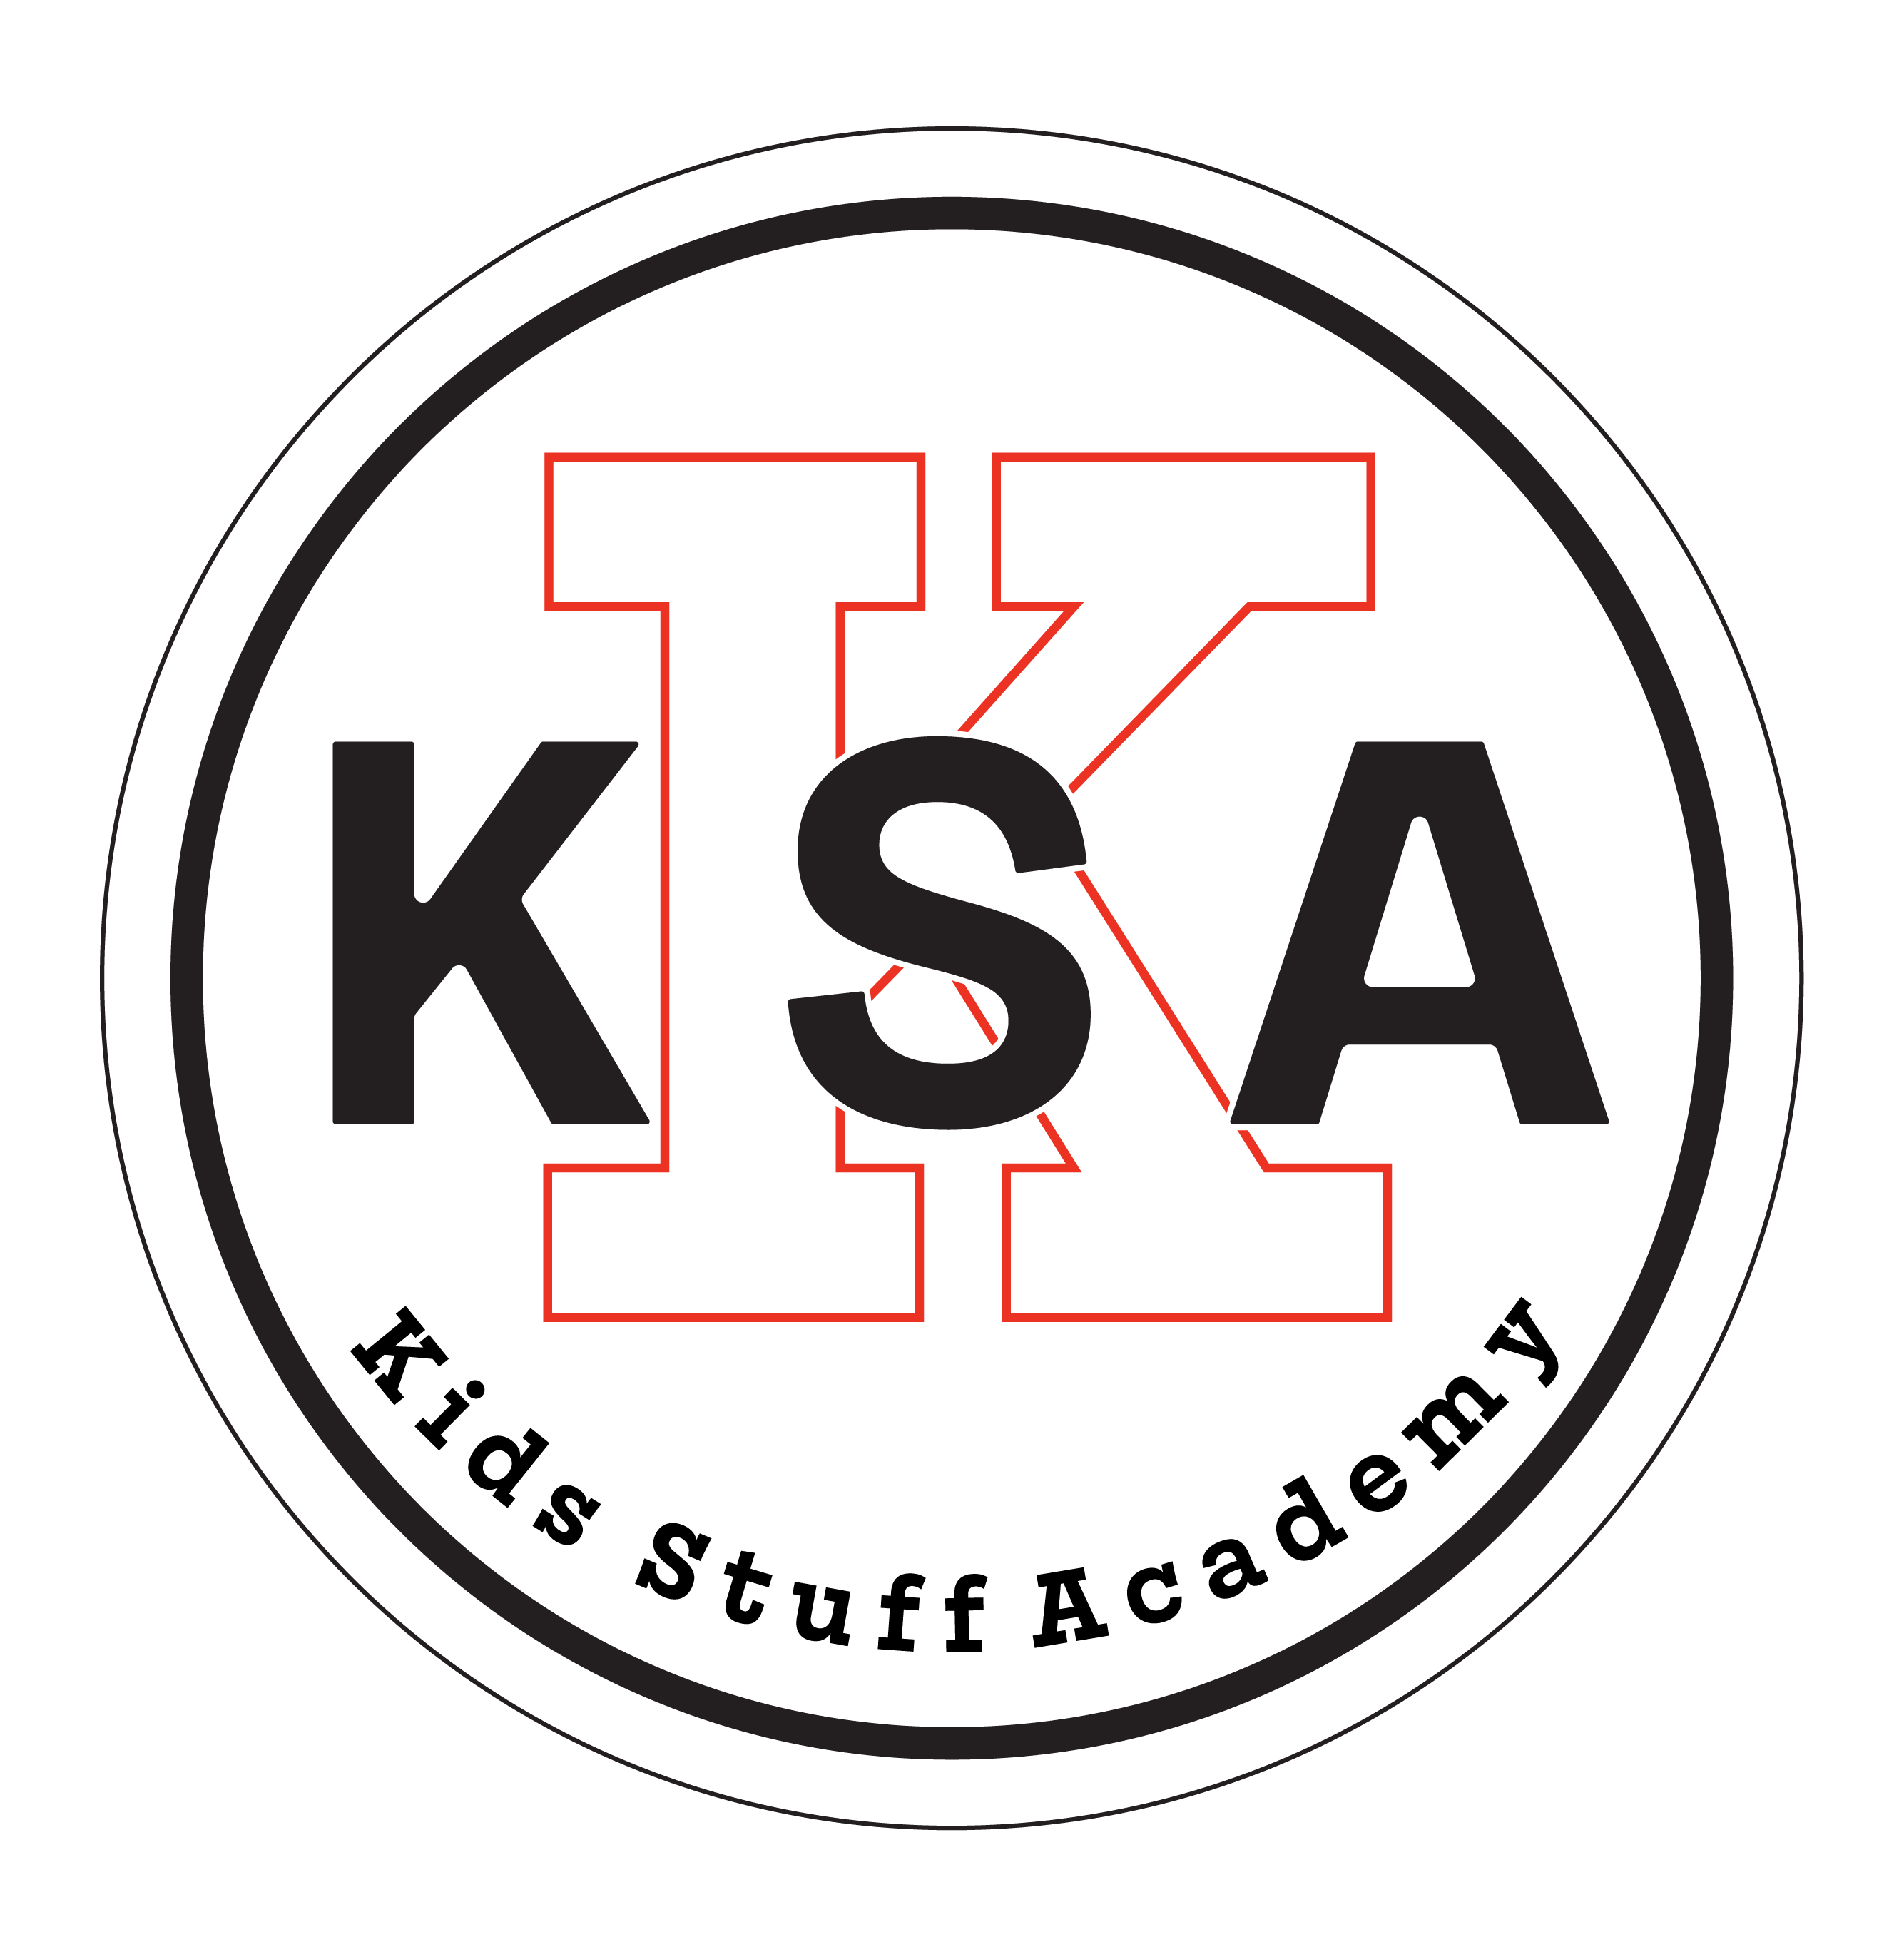 Kids stuff academy logo